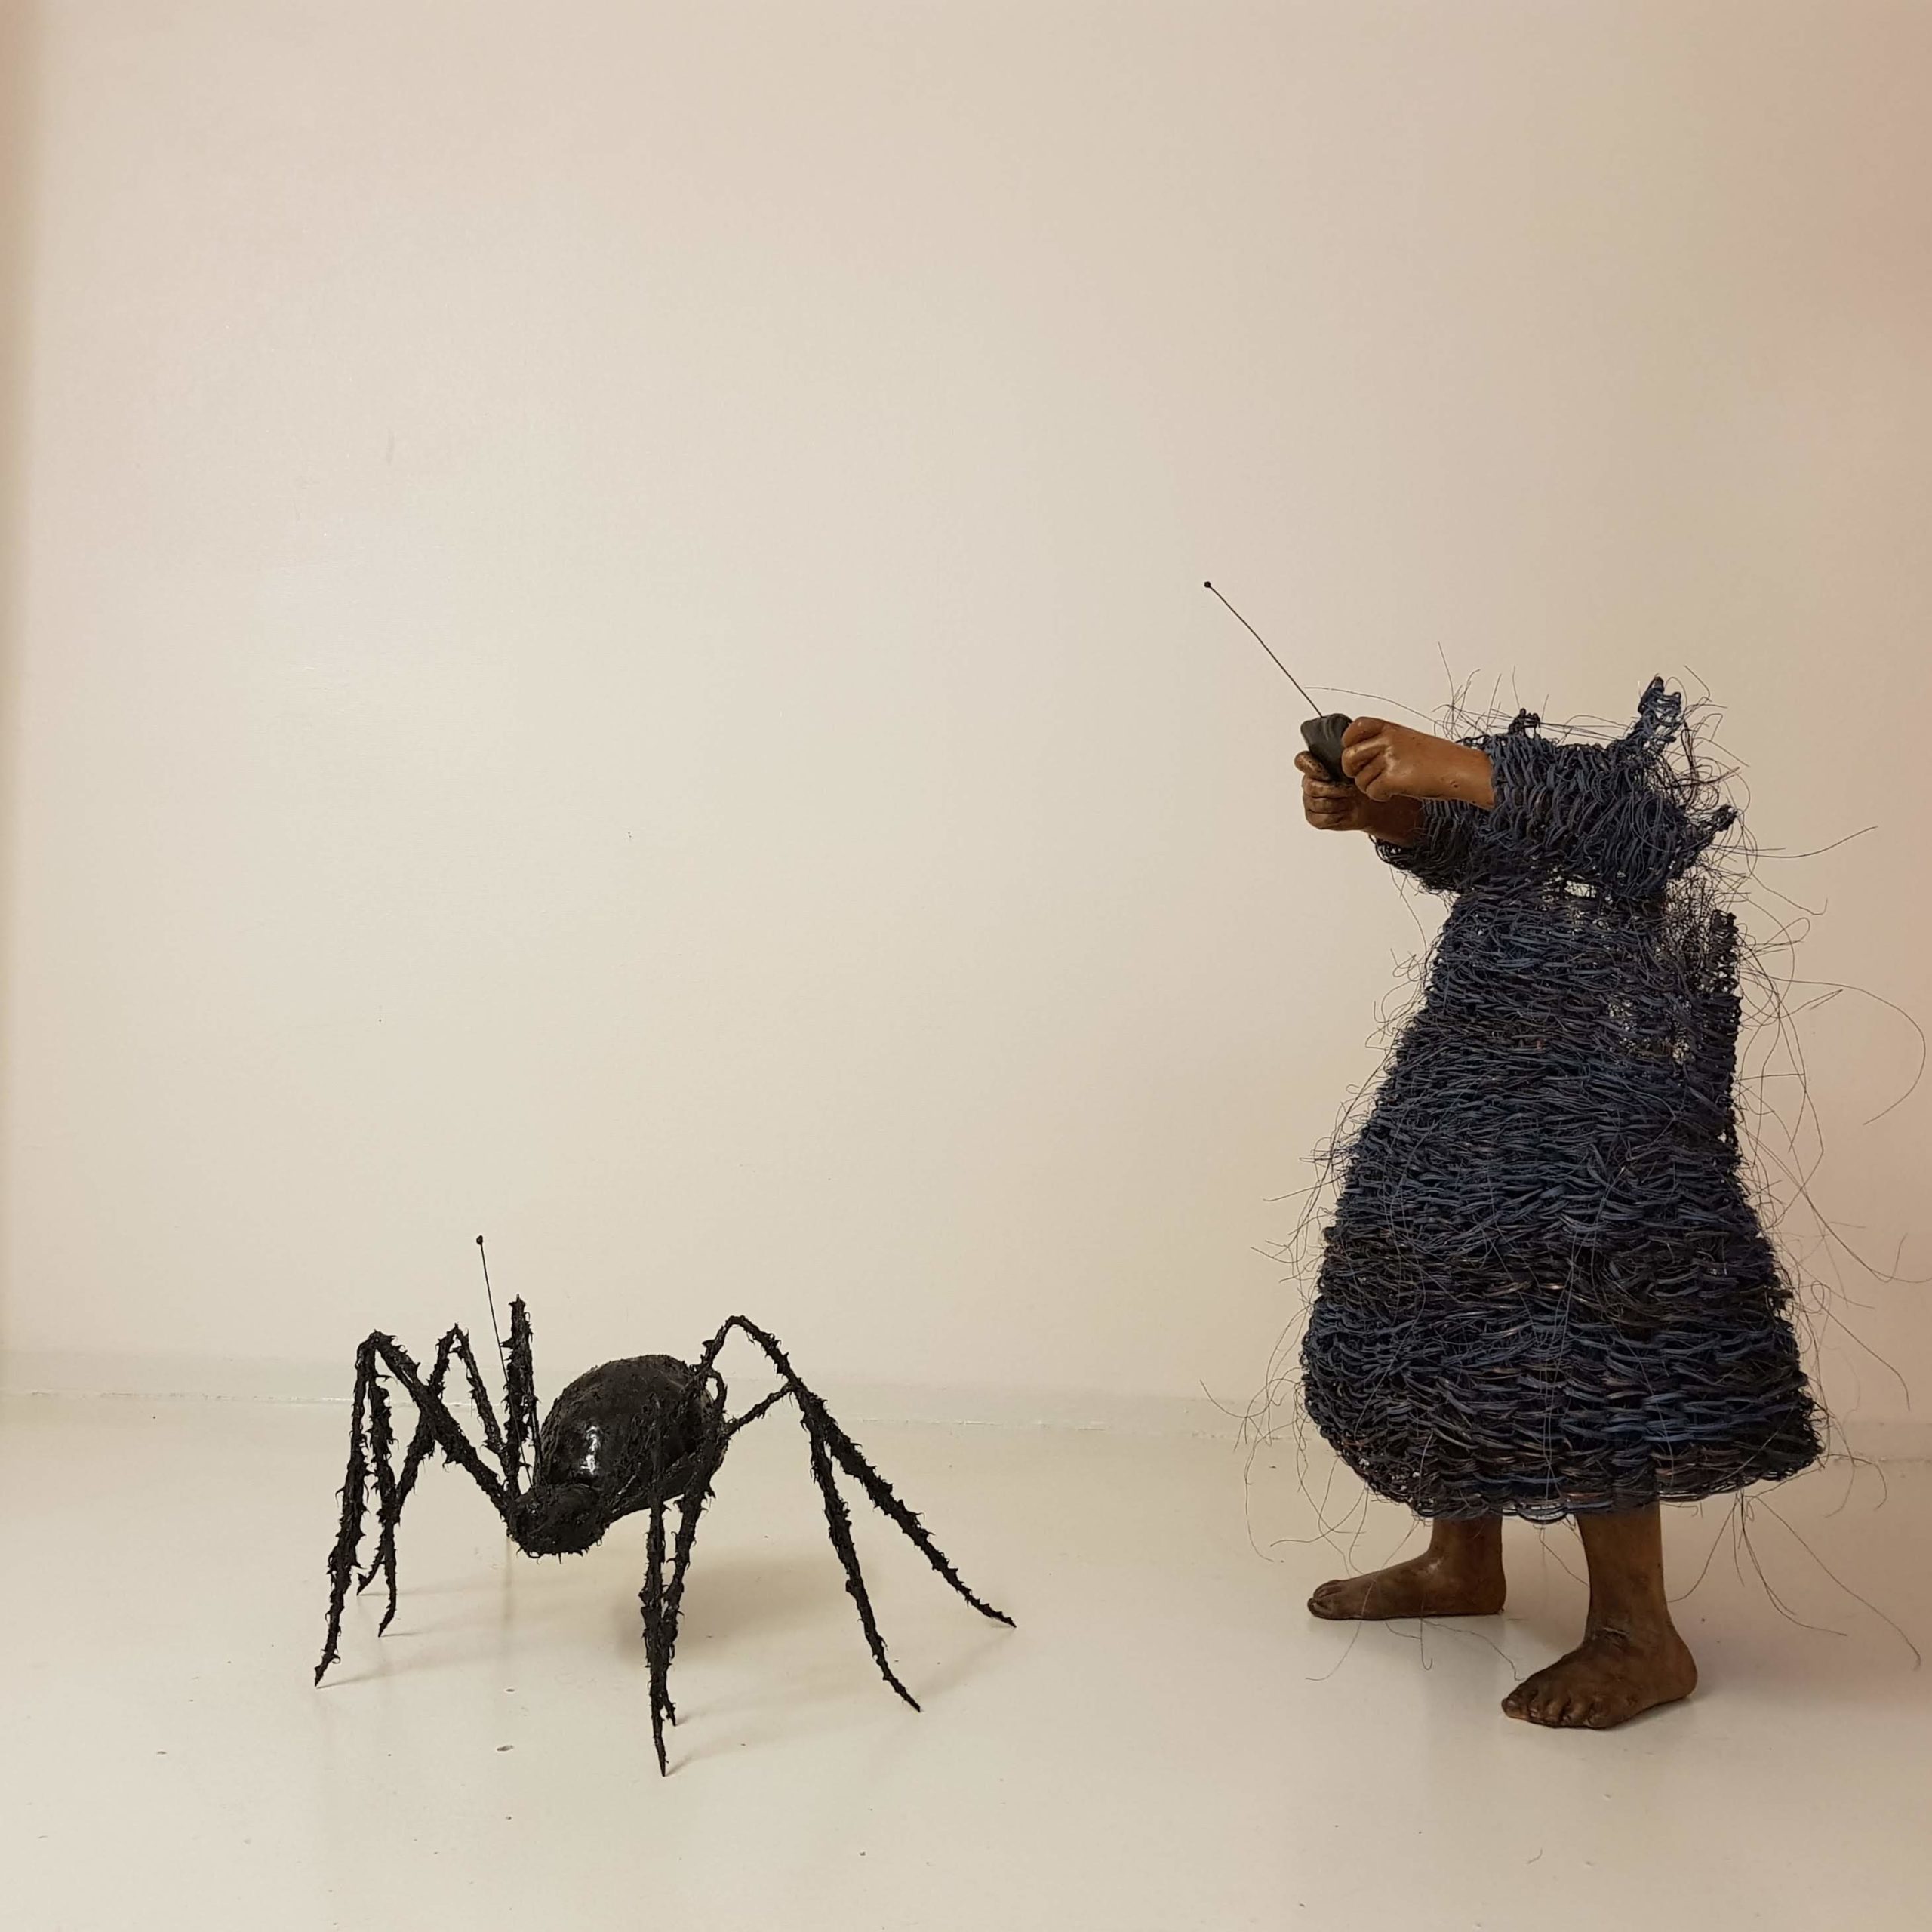 5_Hiro Hiro Art Space_Lene Kilde Remote Control Spider 水泥, 鐵線Concrete, steel 蜘蛛Spider 34 X 44 X 54 CM 小孩Child 83 X 42 X 52 CM 2019